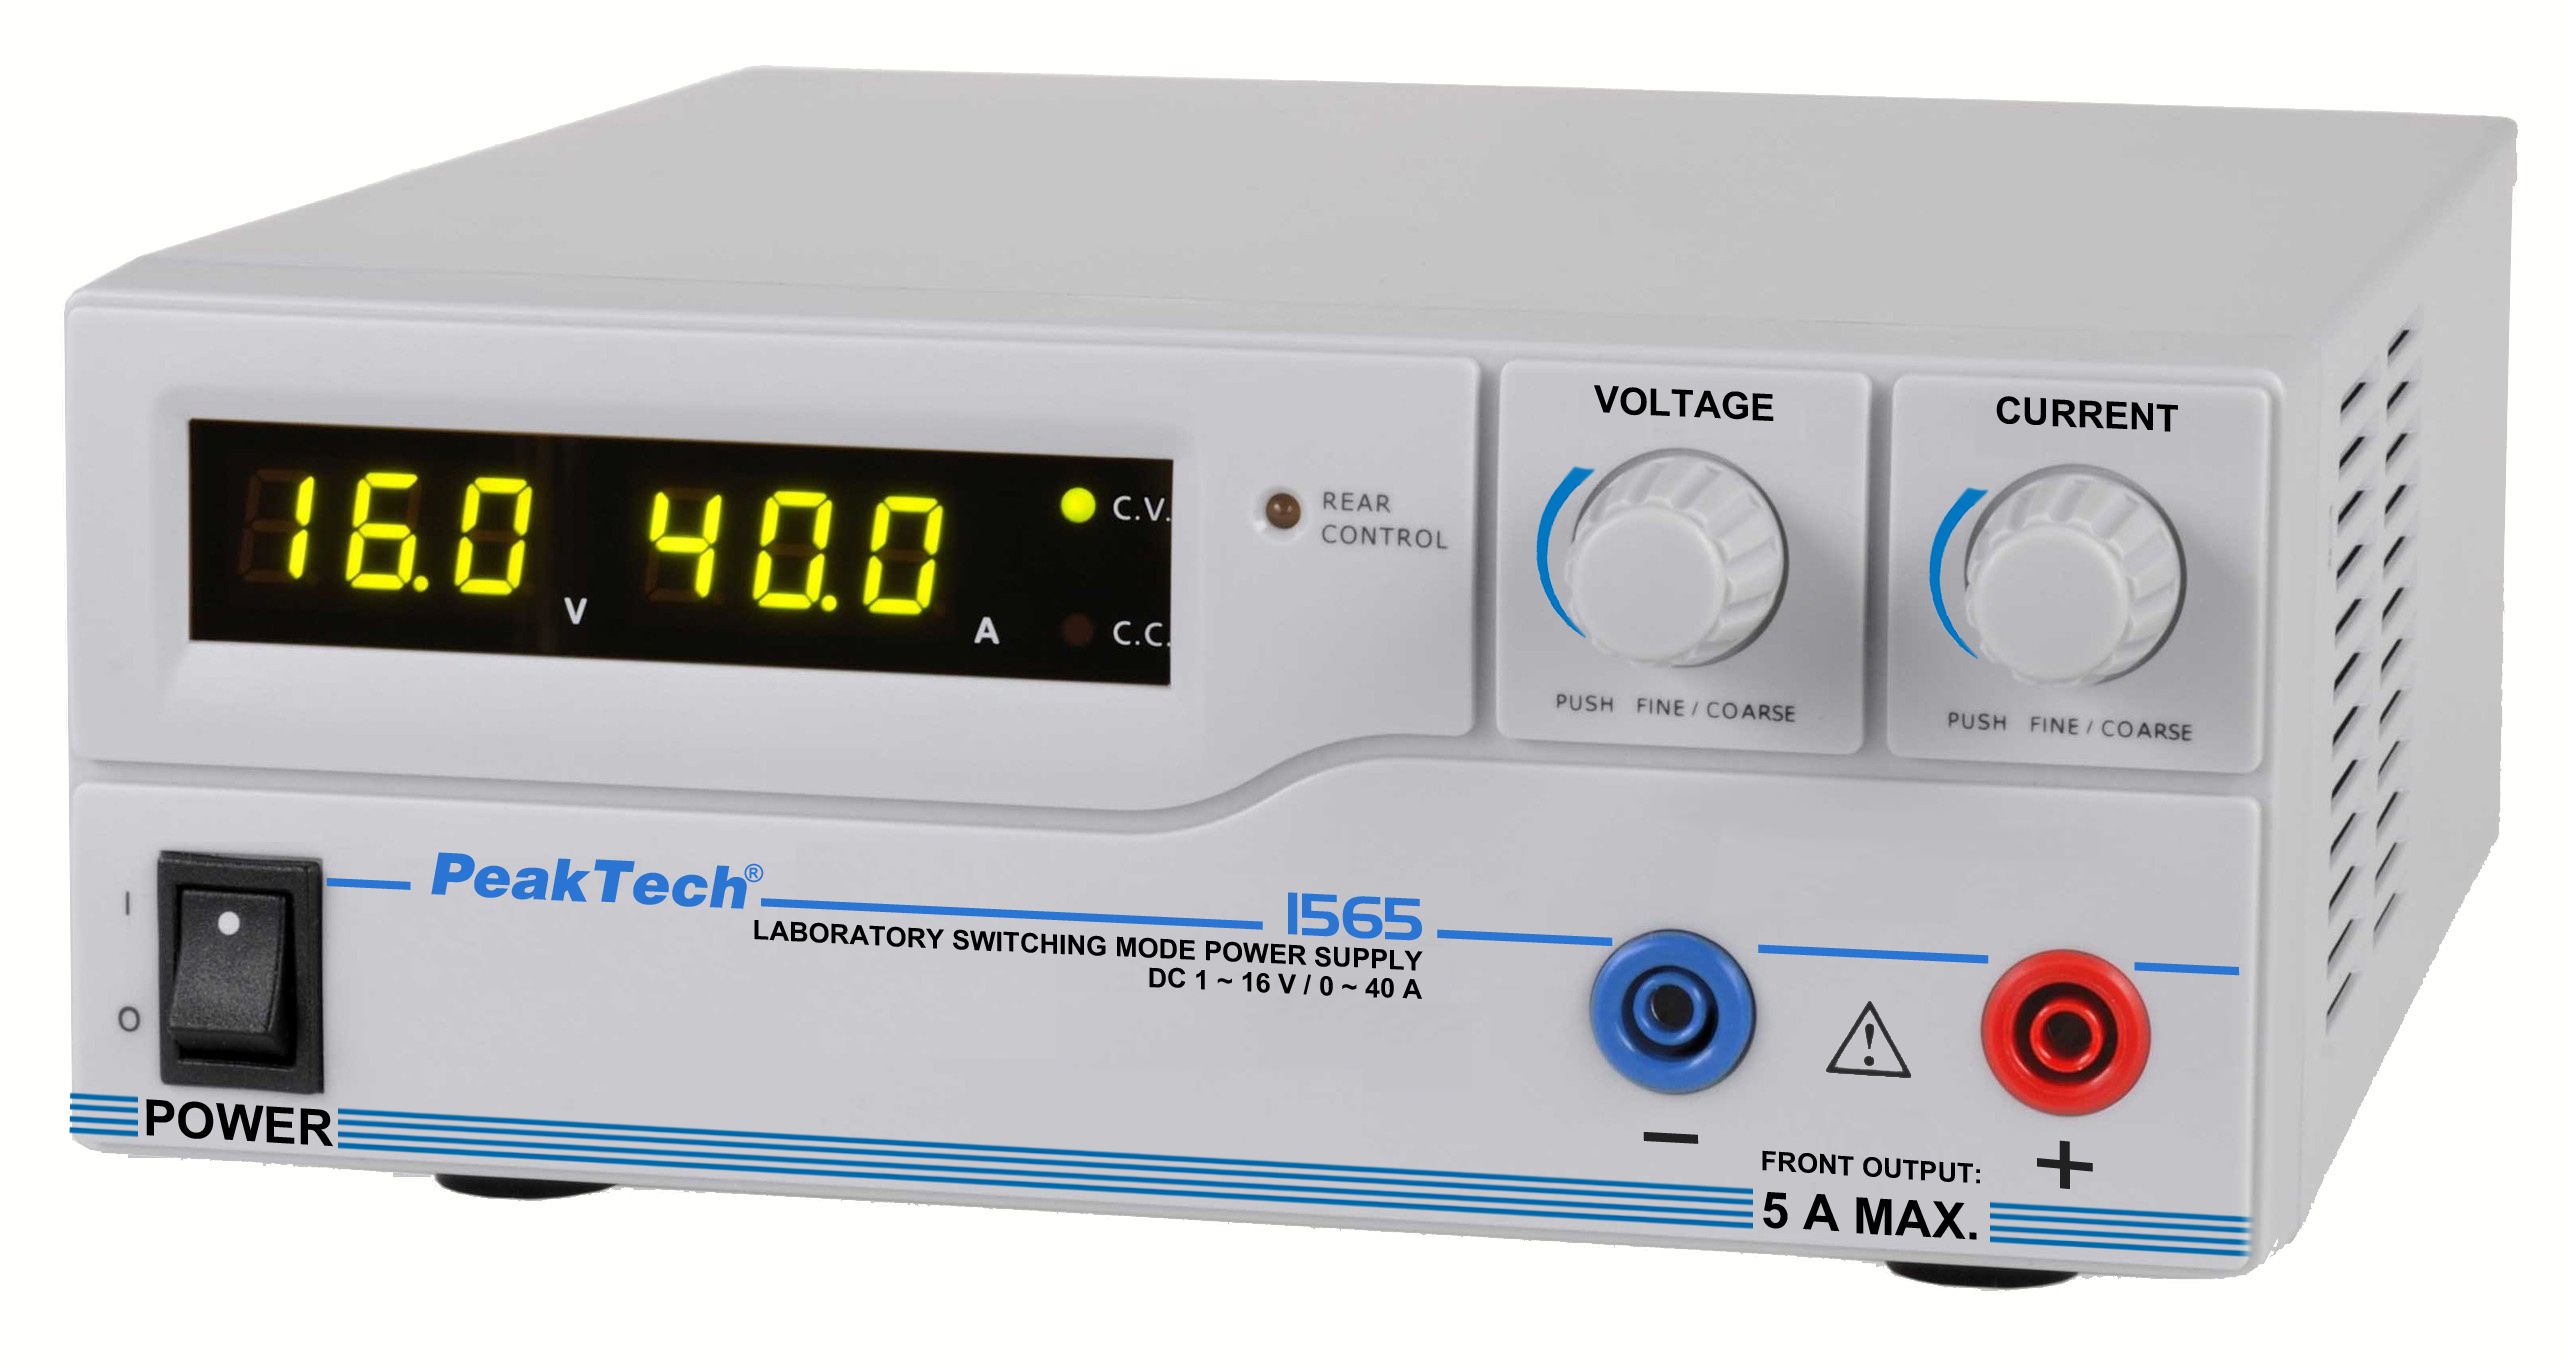 «PeakTech® P 1565» Laboratory power supply DC 1 - 16V/0 - 40A & USB